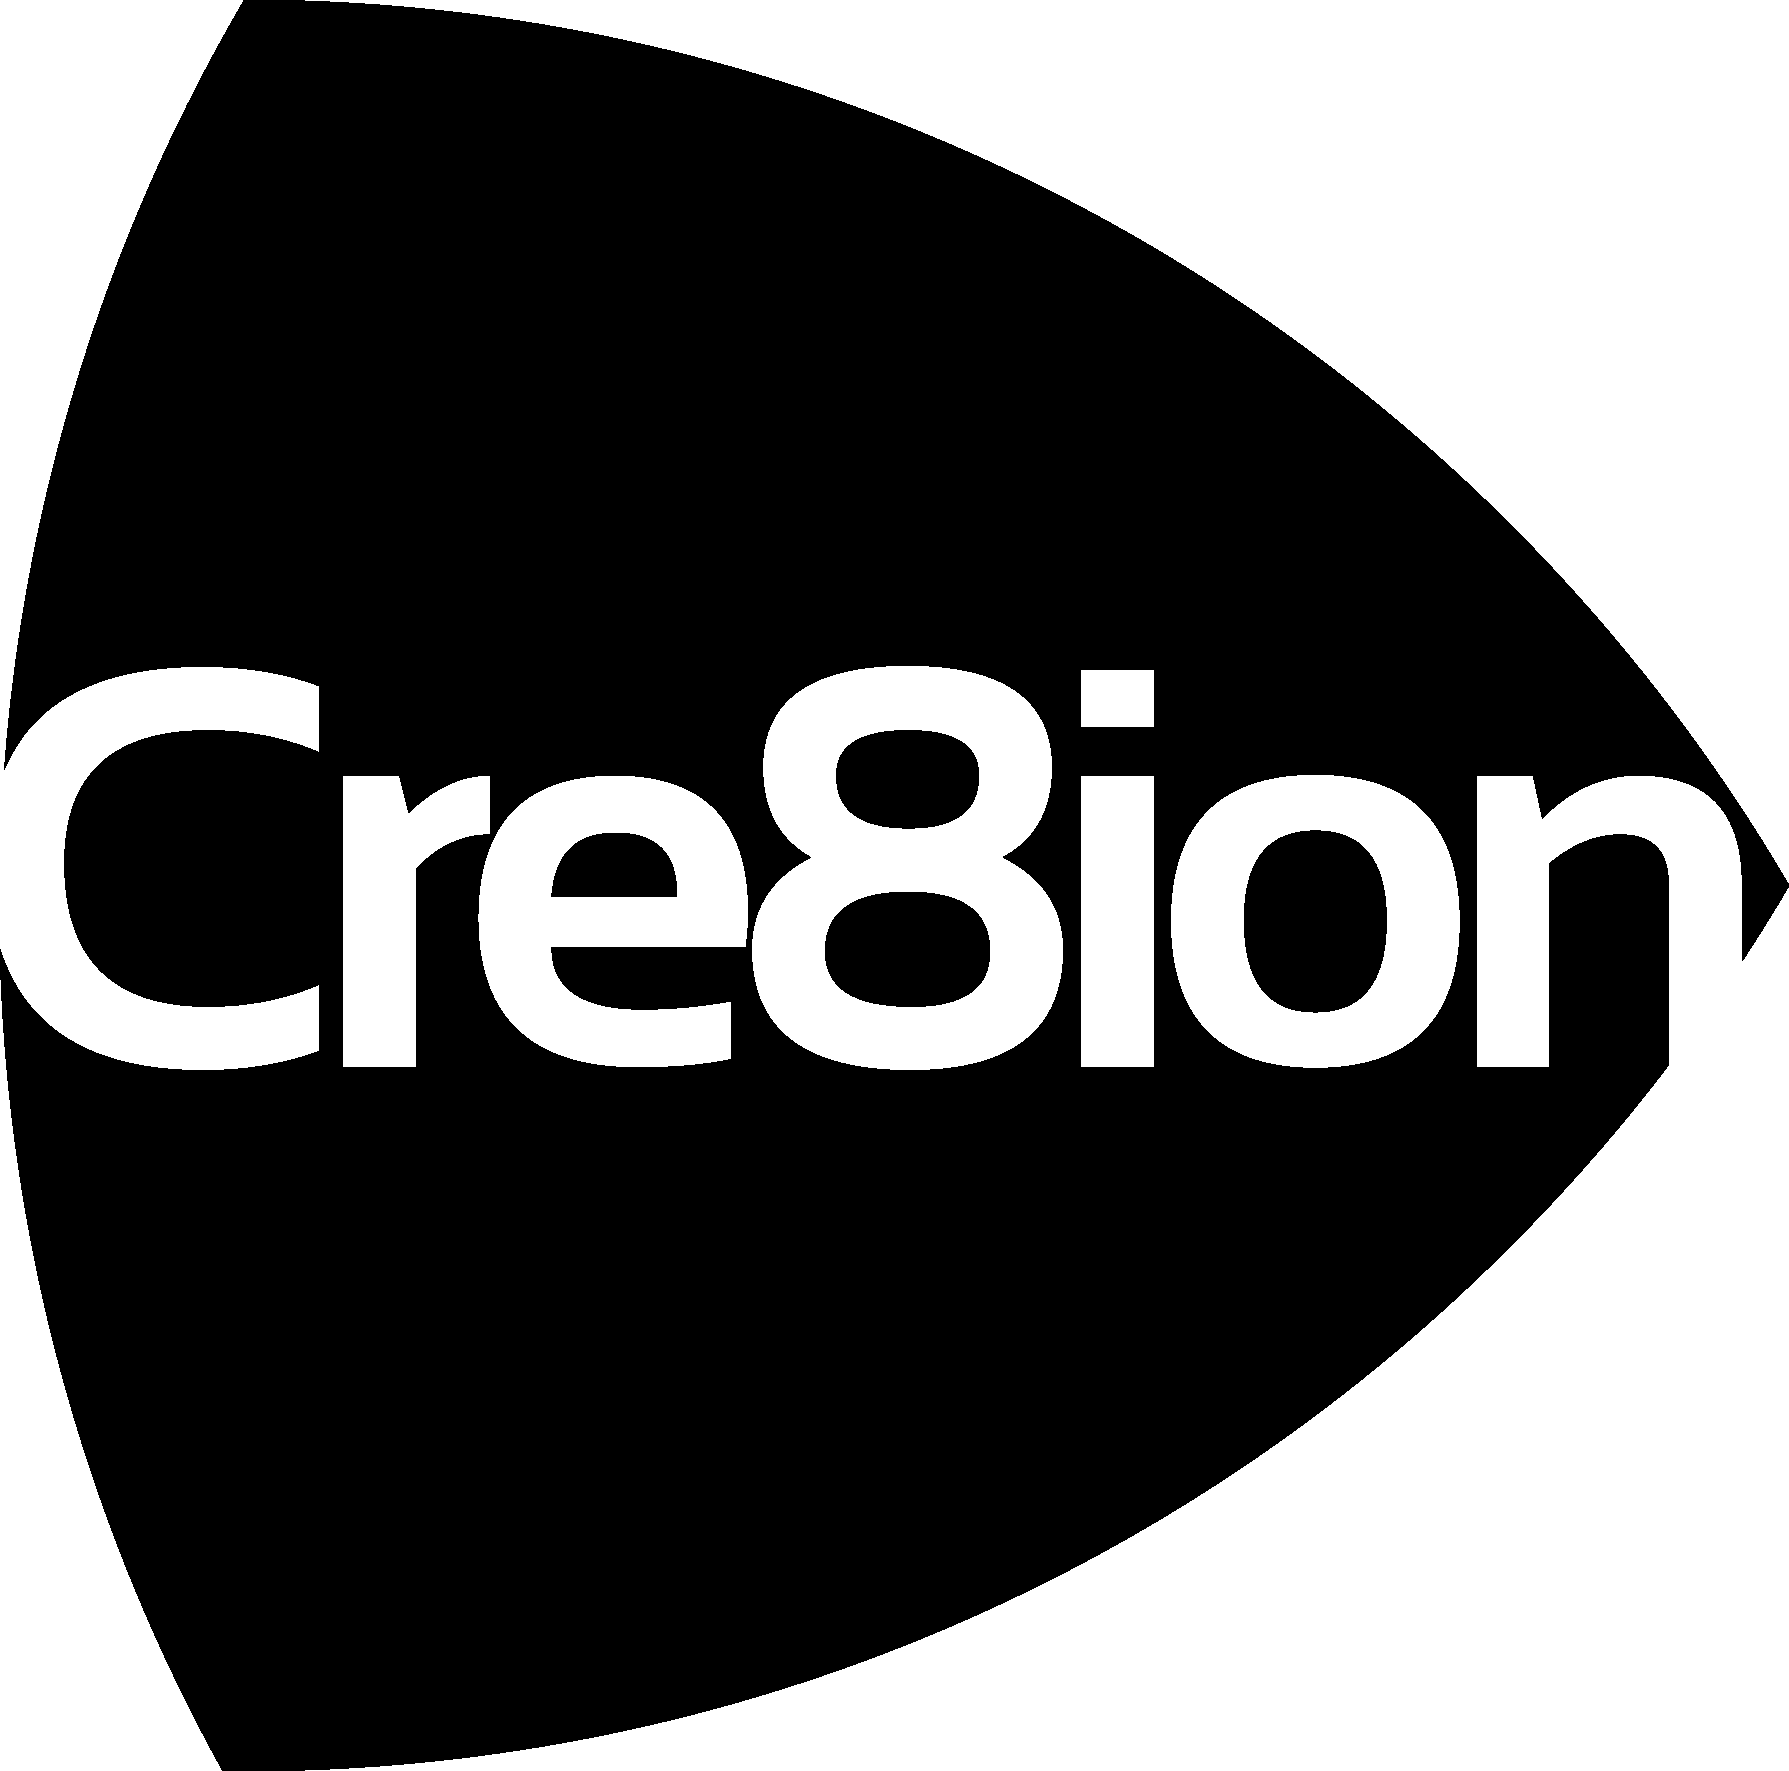 cre8ion logo